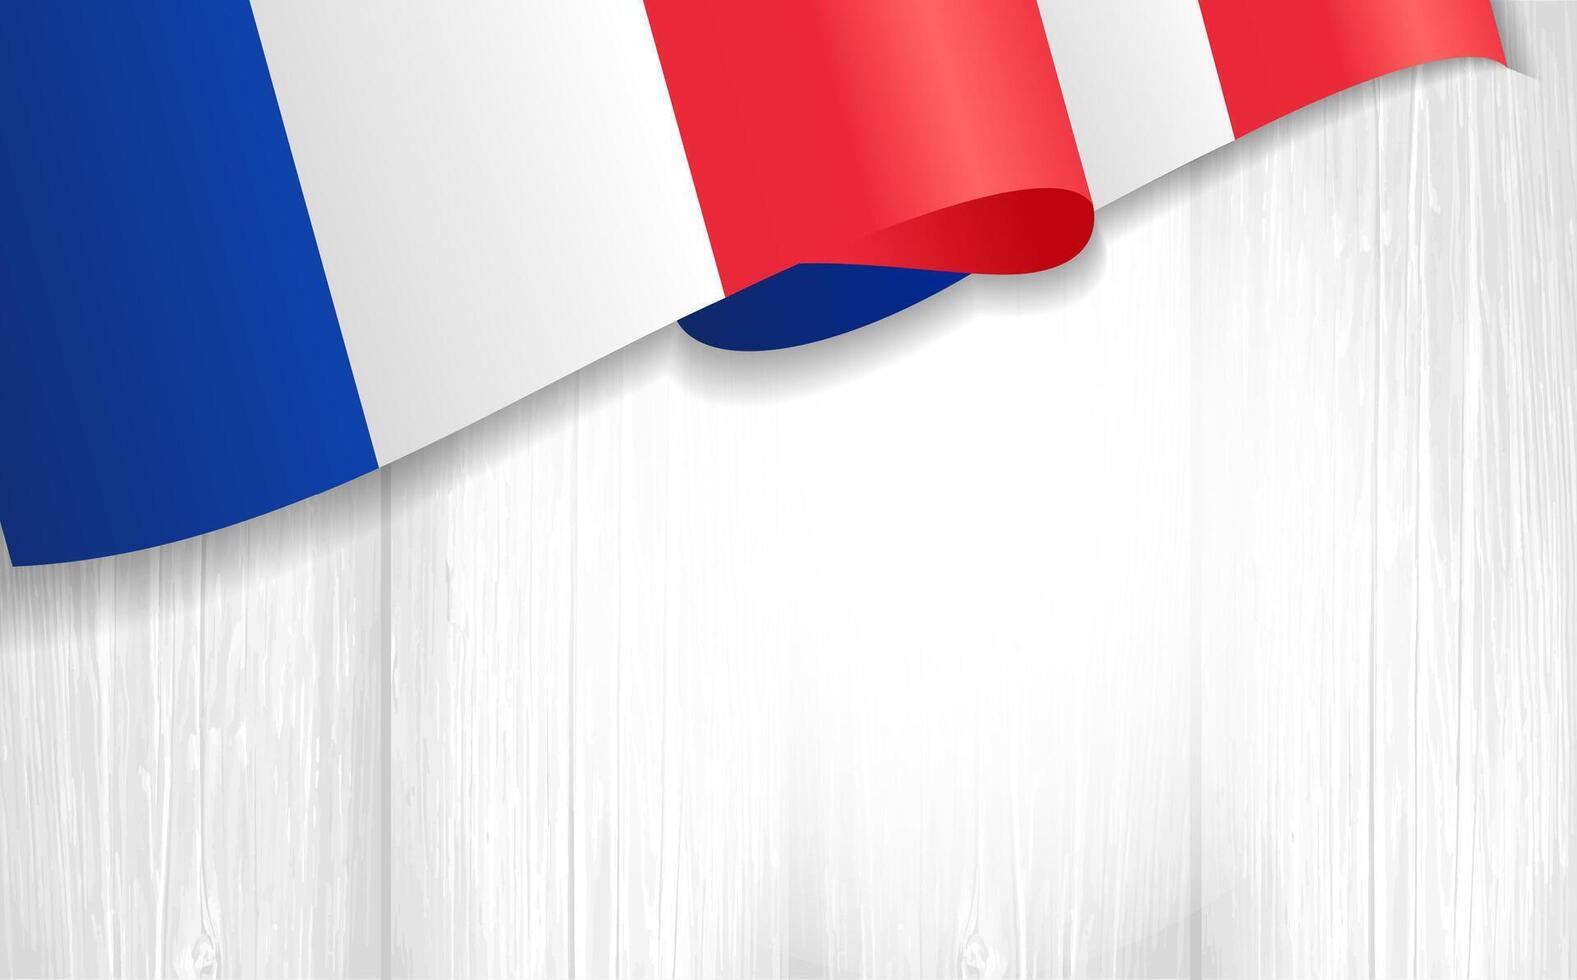 3d Francia bandera en de madera tablón. creativo antecedentes con francés nacional bandera. vector ilustración